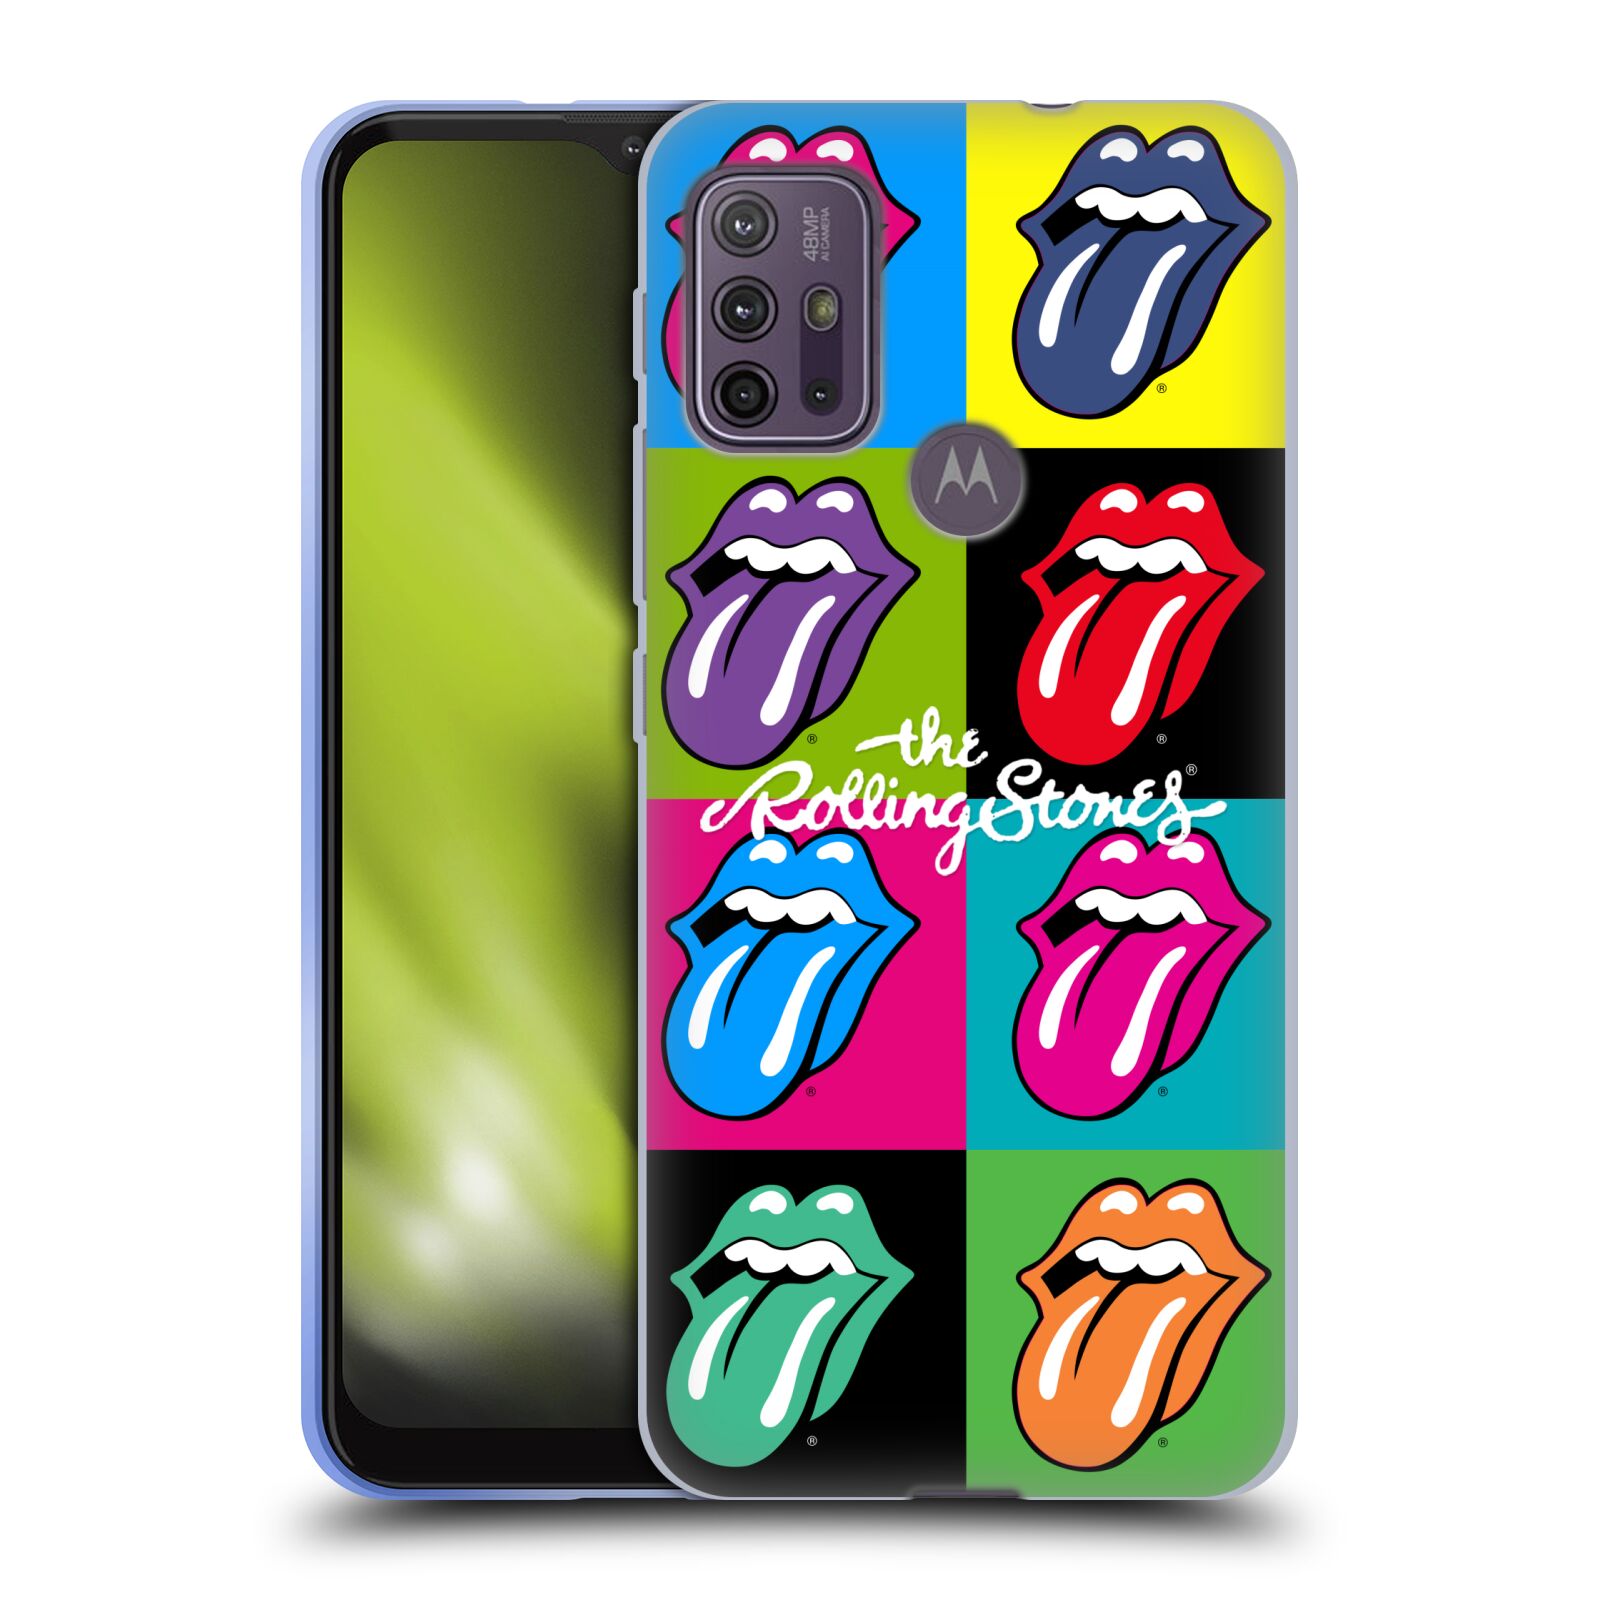 Silikonové pouzdro na mobil Motorola Moto G10 / G30 - Head Case - The Rolling Stones - Pop Art Vyplazené Jazyky